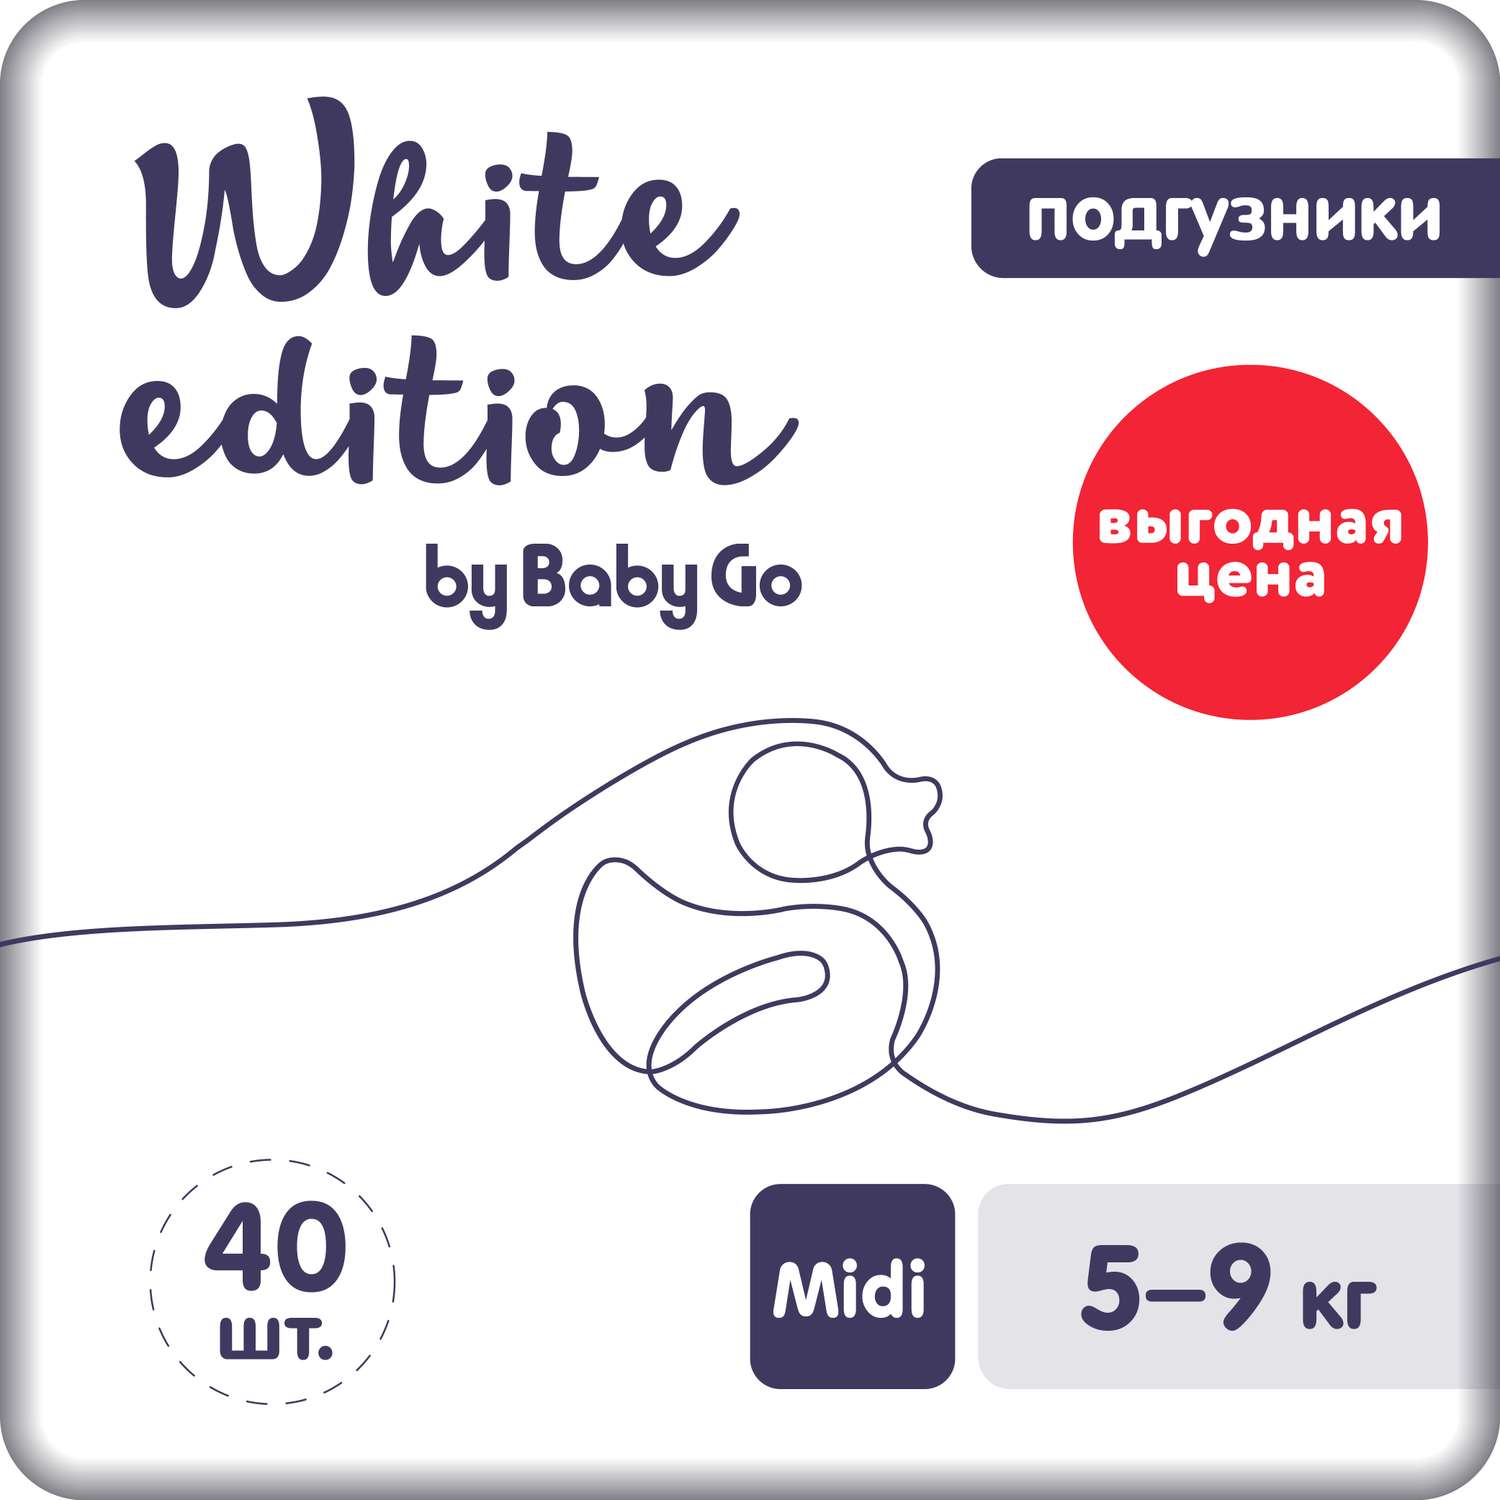 Подгузники White Edition Midi 5-9кг 40шт - фото 1